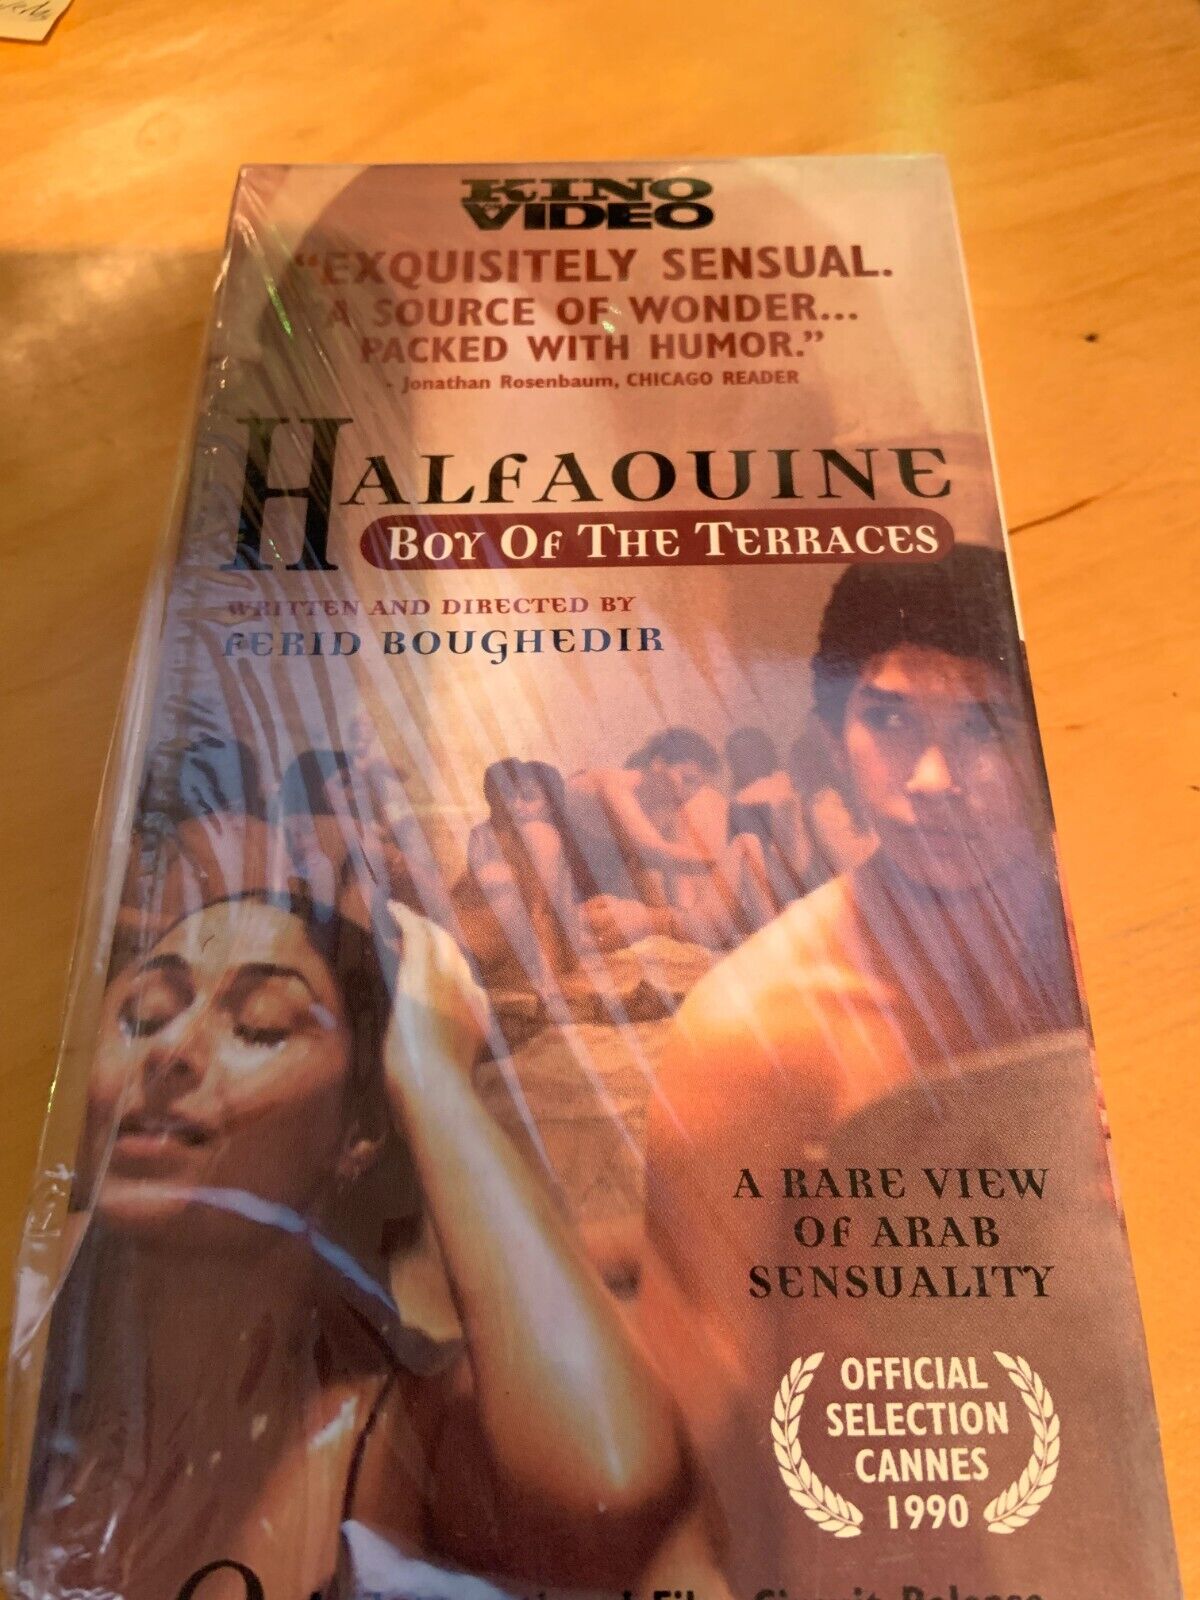 Halfaouine: Boy of the Terraces (1990) VHS New sealed Arab cinema | eBay